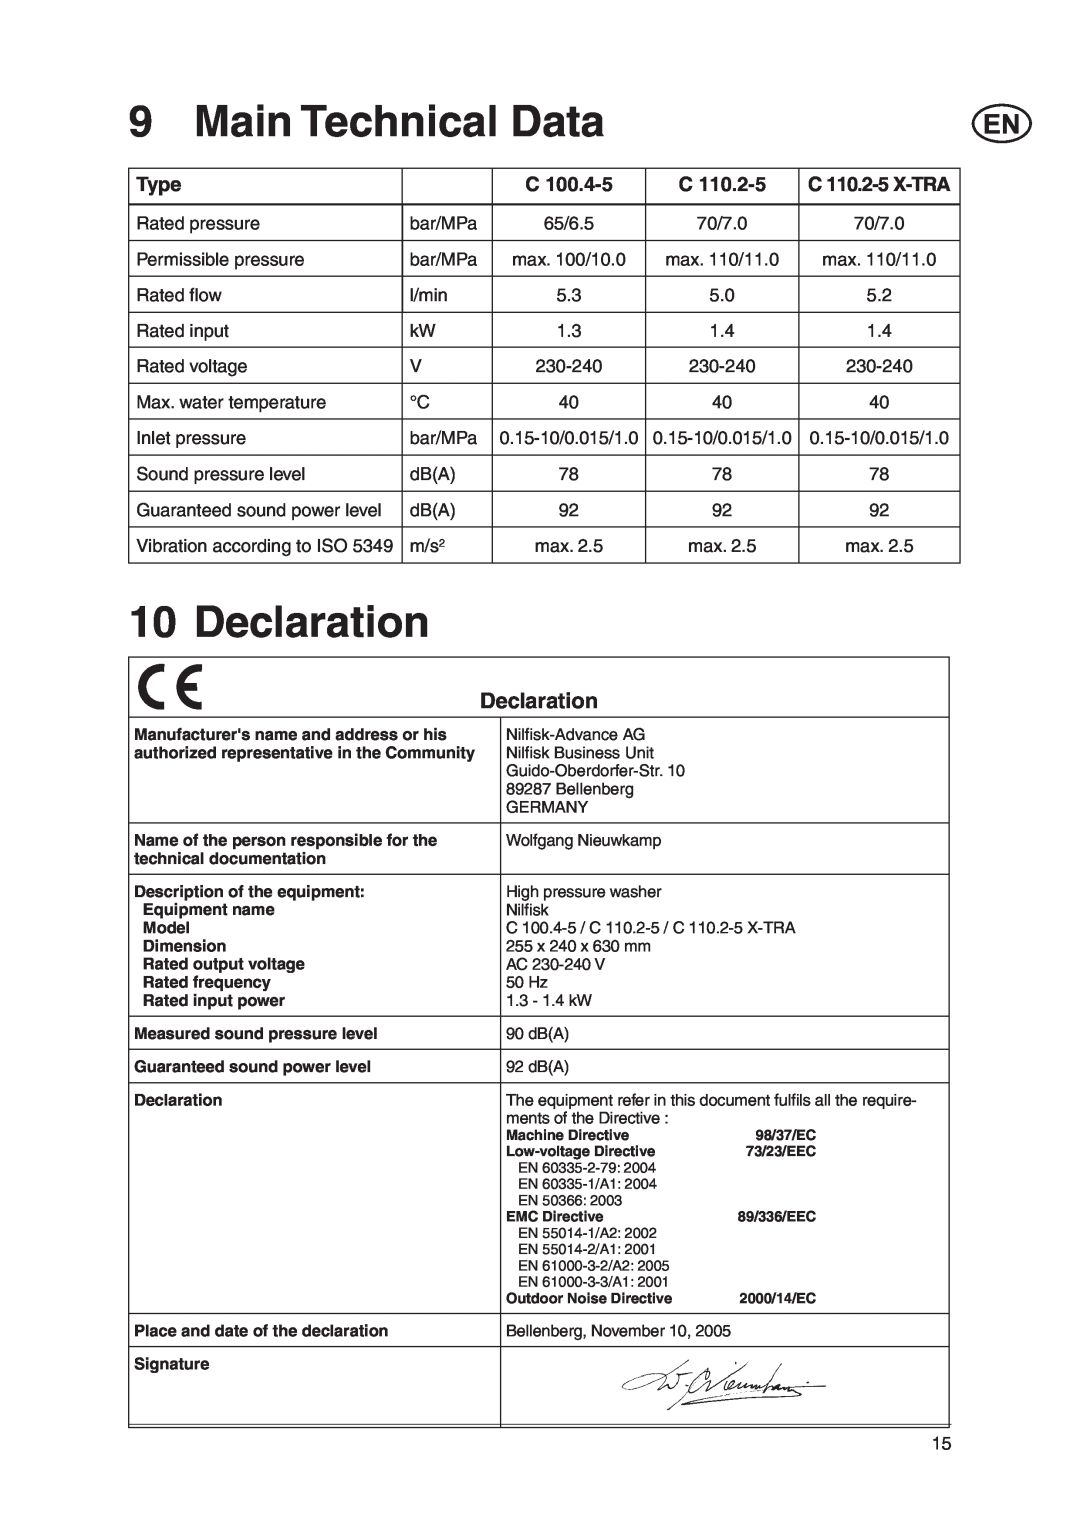 Nilfisk-ALTO C 110.2 X-TRA, Nilfisk C 100.4 user manual Main Technical Data, Declaration, C 110.2-5 X-TRA, Type 